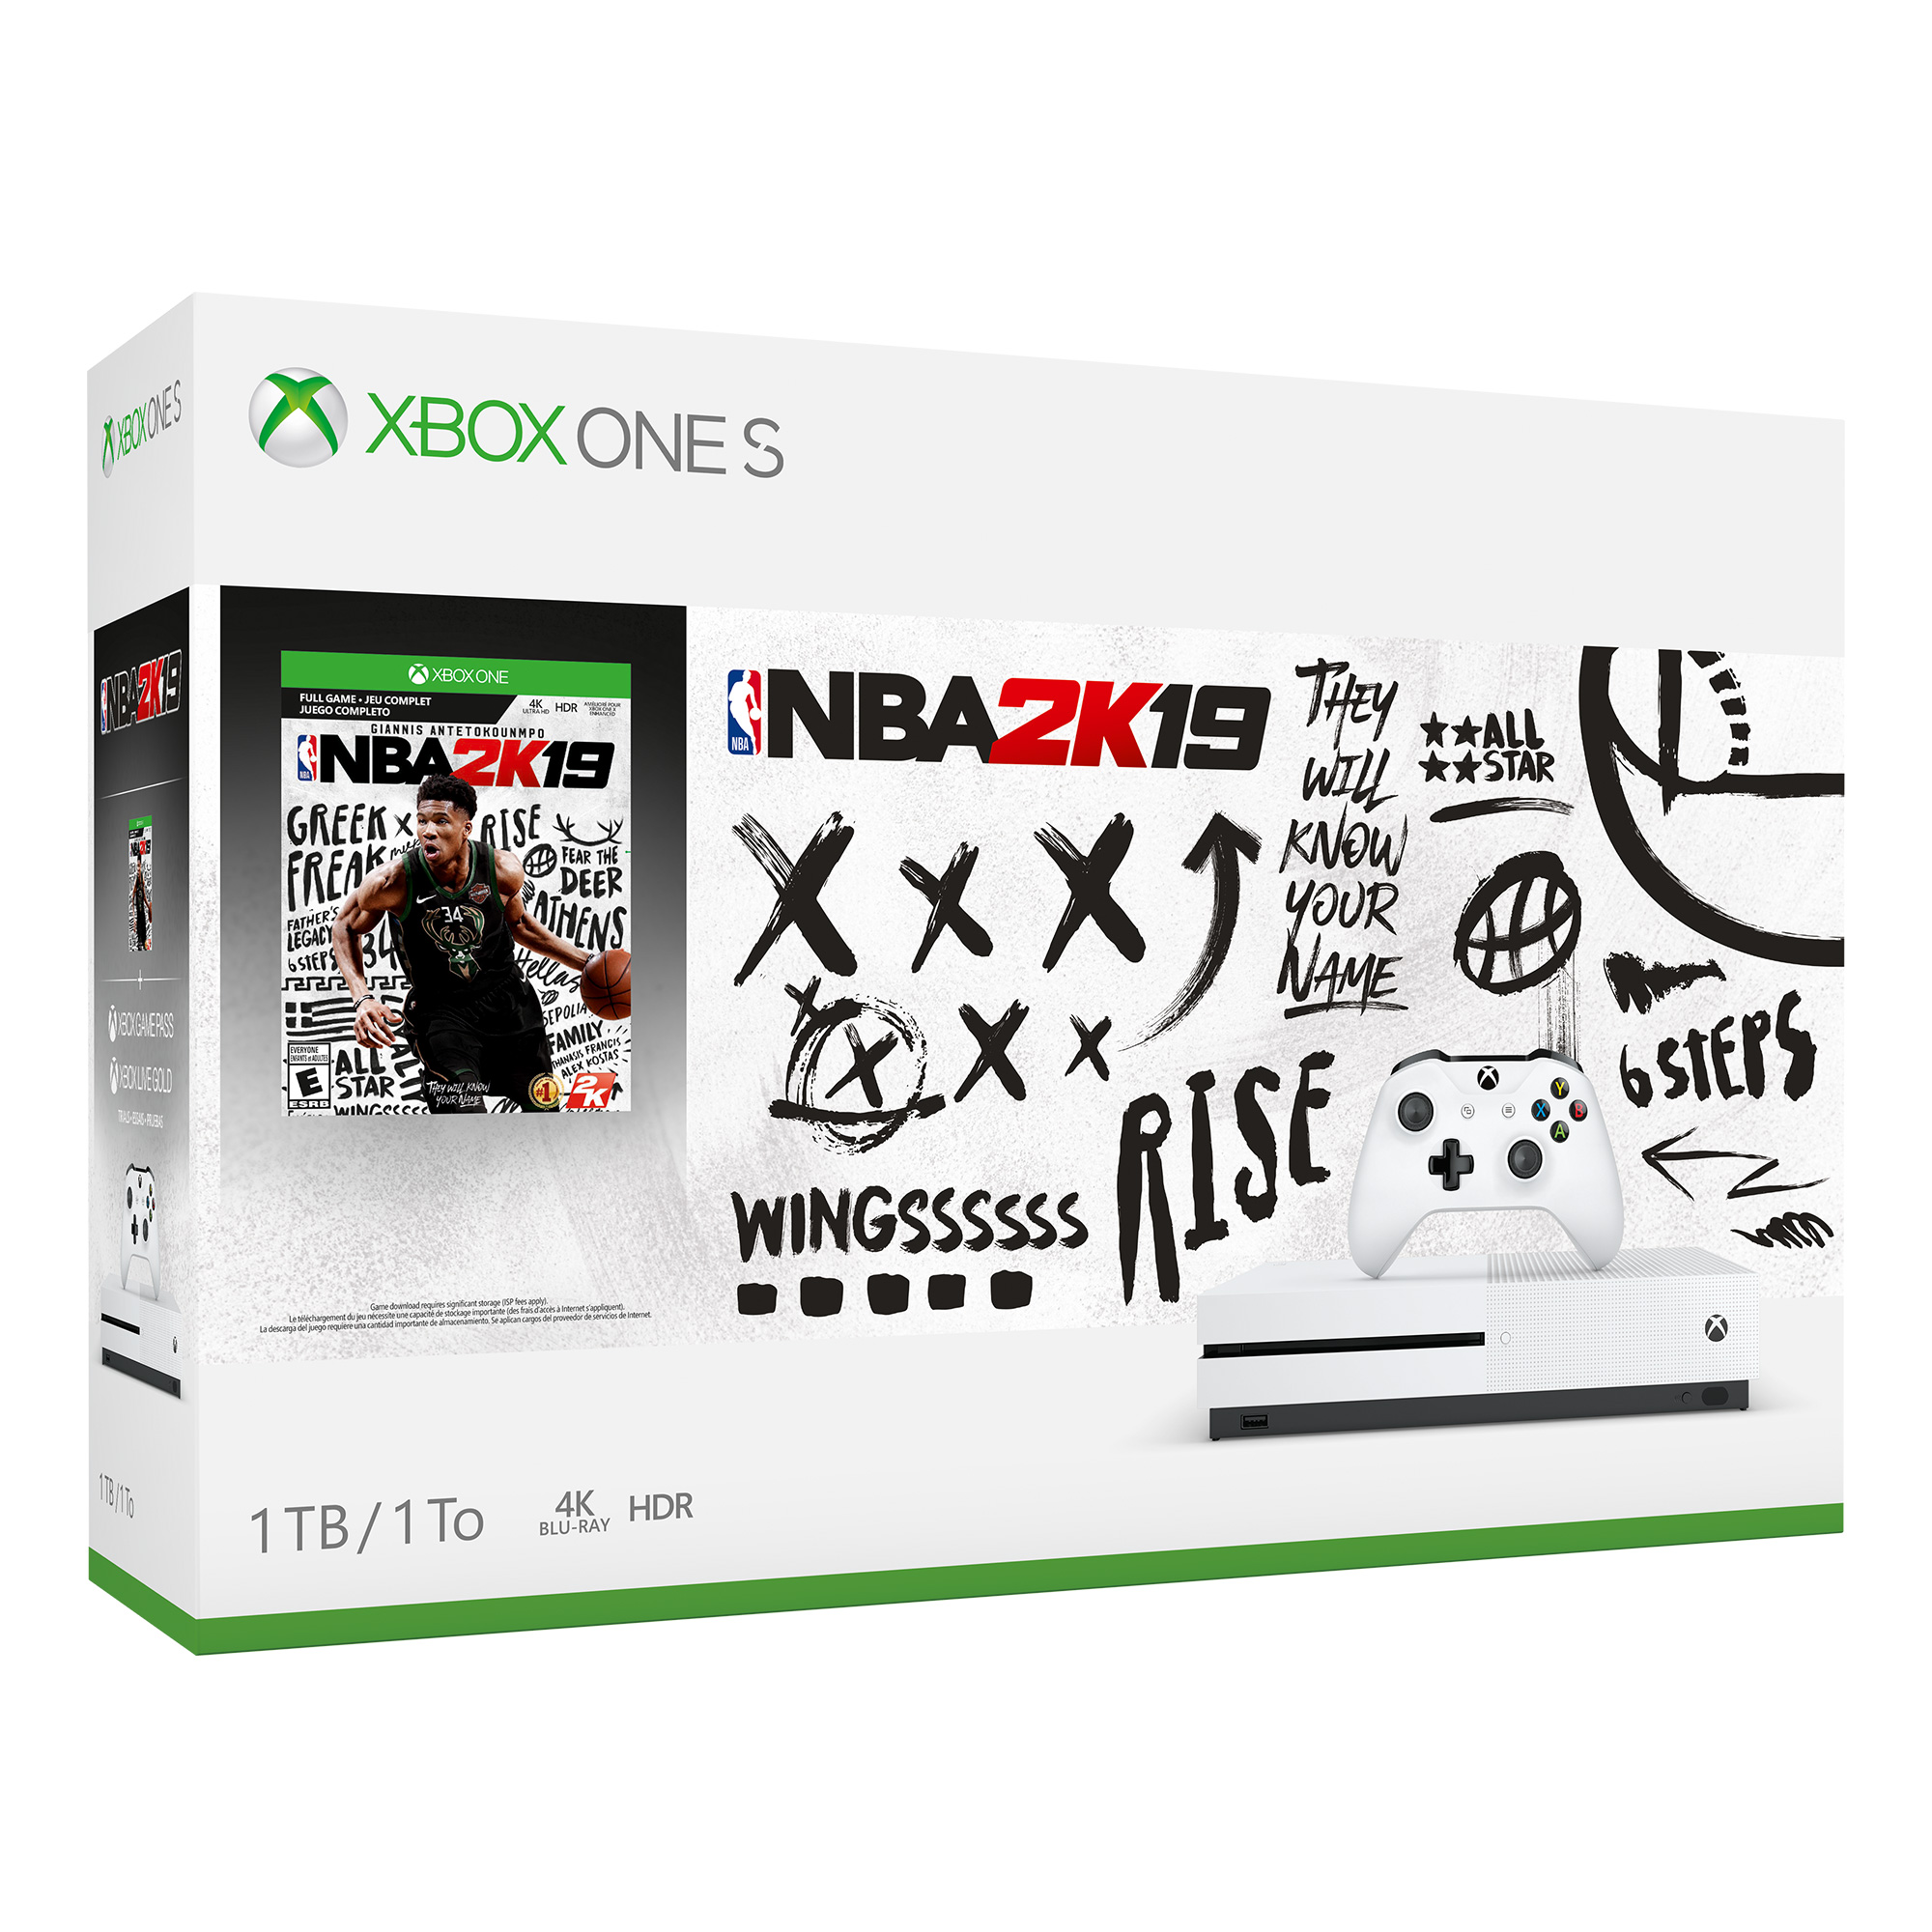 Microsoft Xbox One S 1TB NBA 2K19 Bundle, White, 234-00575 - image 1 of 10